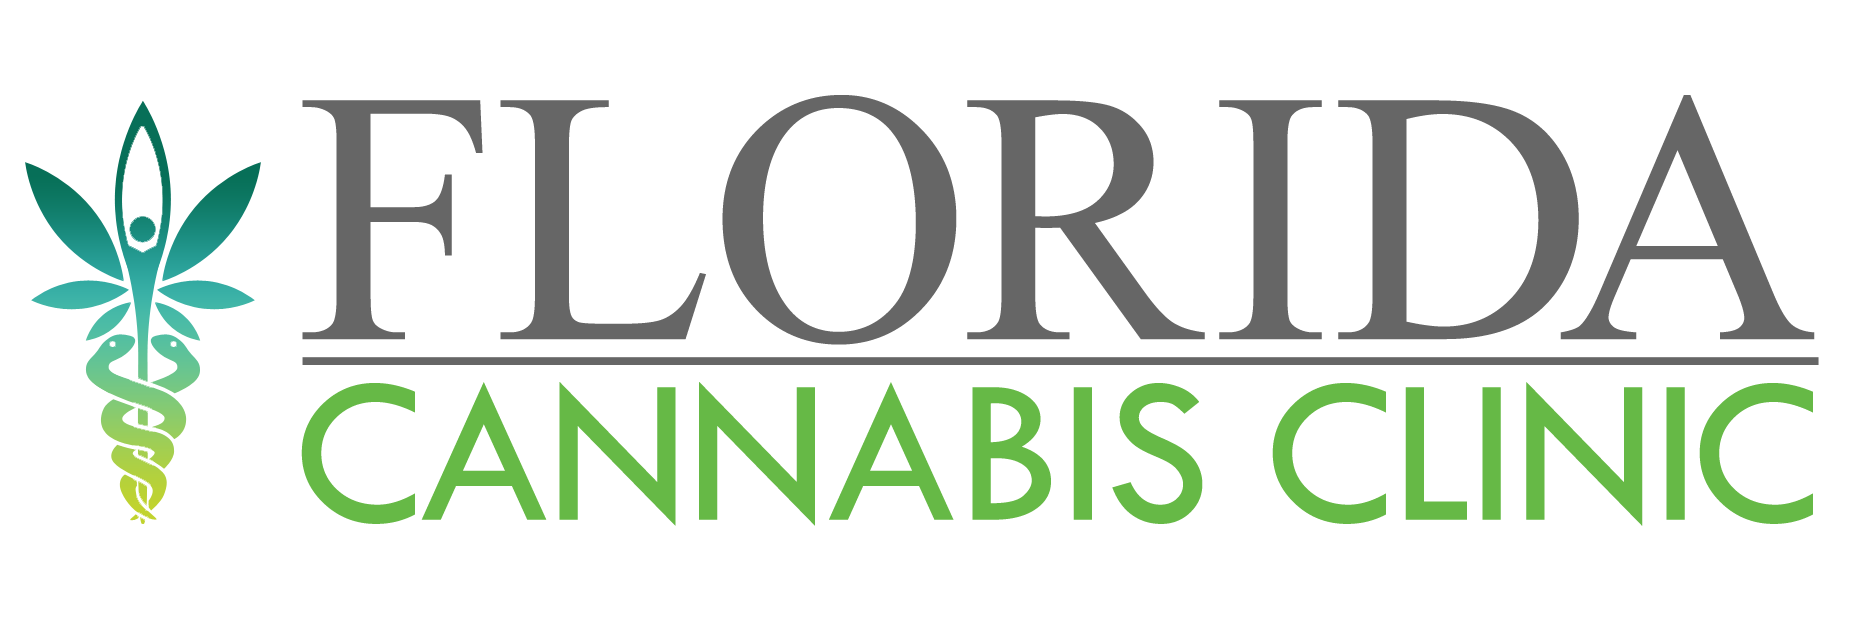 Florida Cannabis Clinic 